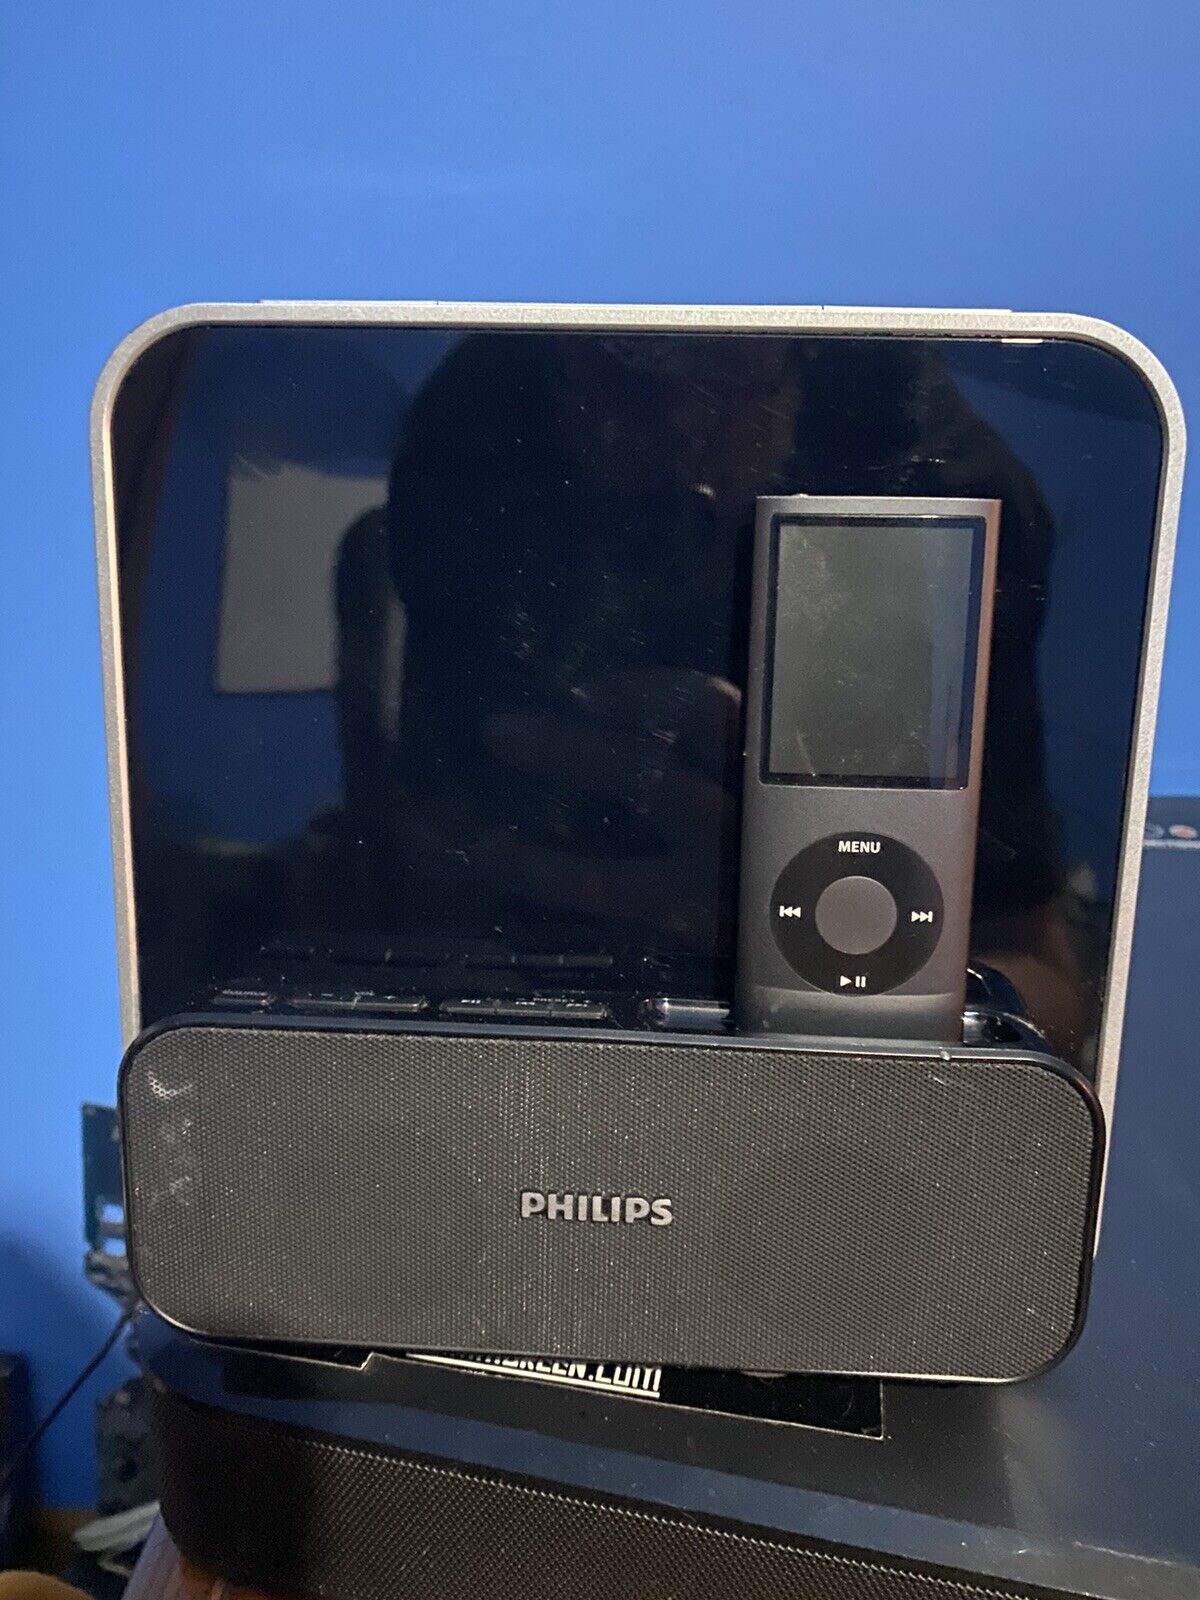 Light legislation Premise Philips Dc315/37 Speaker System for 30-pin Ipod/iphone With LED Clock Radio  for sale online | eBay